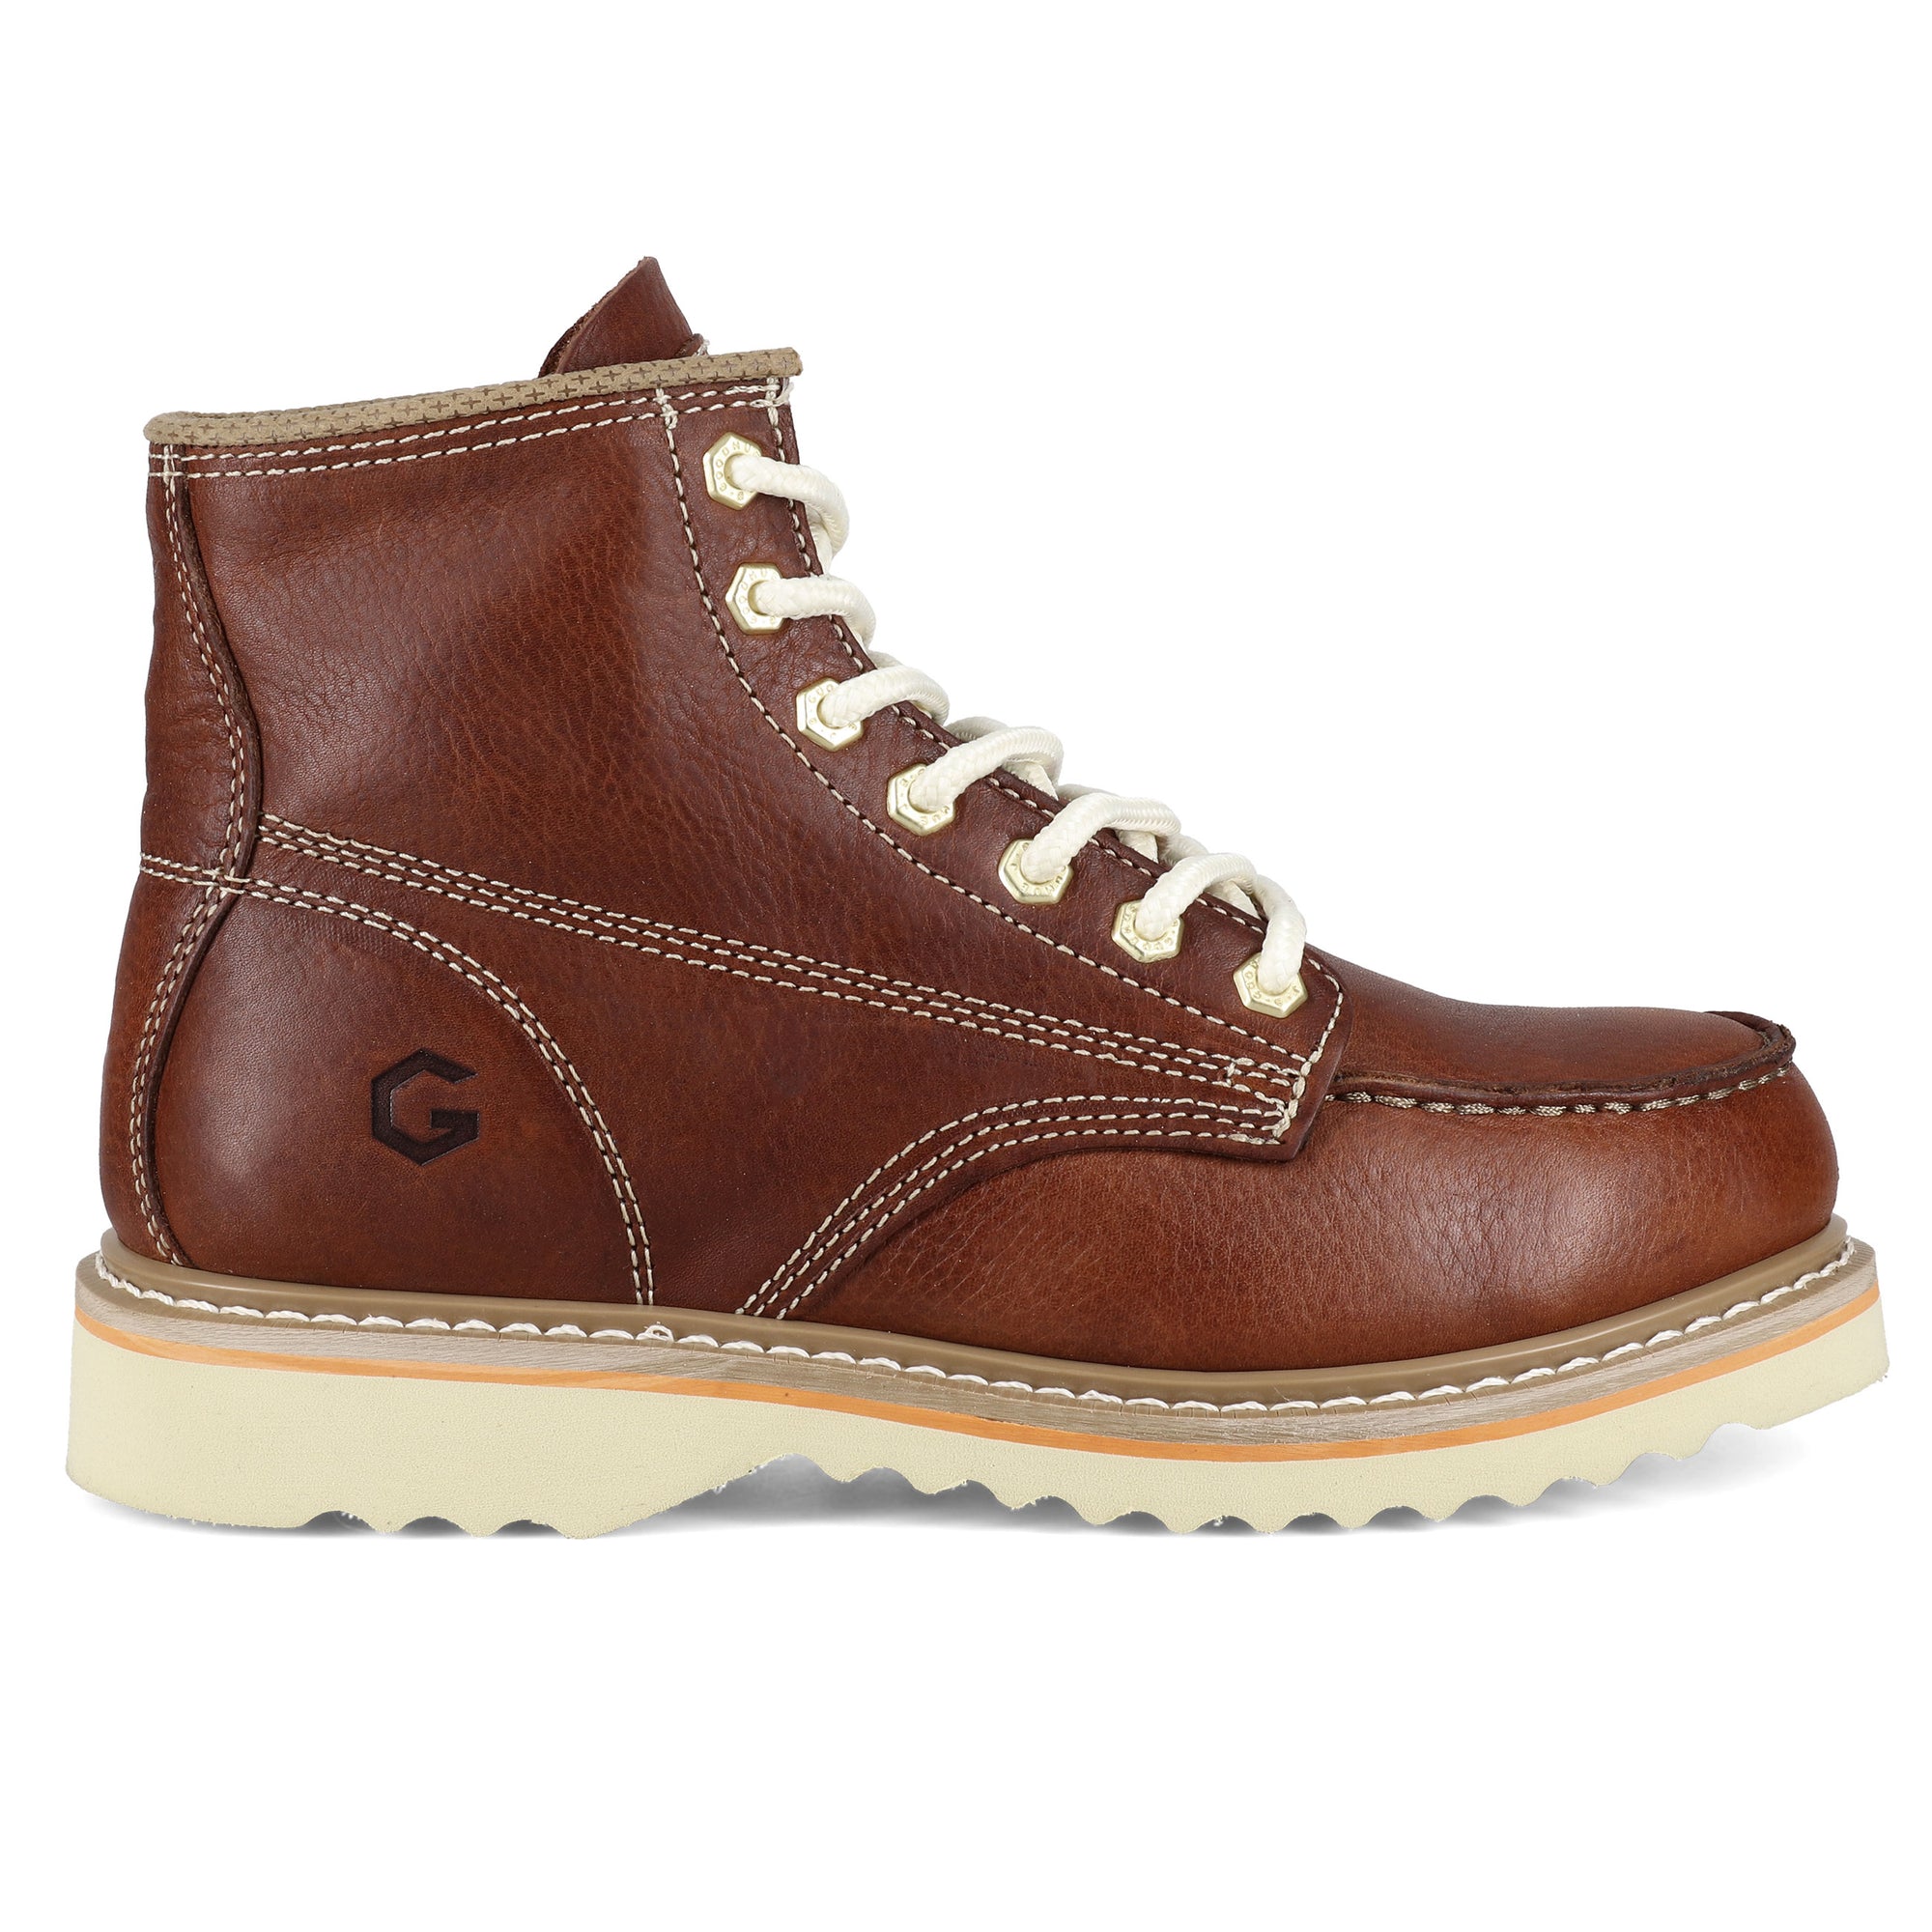 Jb Goodhue Farmer2 00748 Brown Shoes